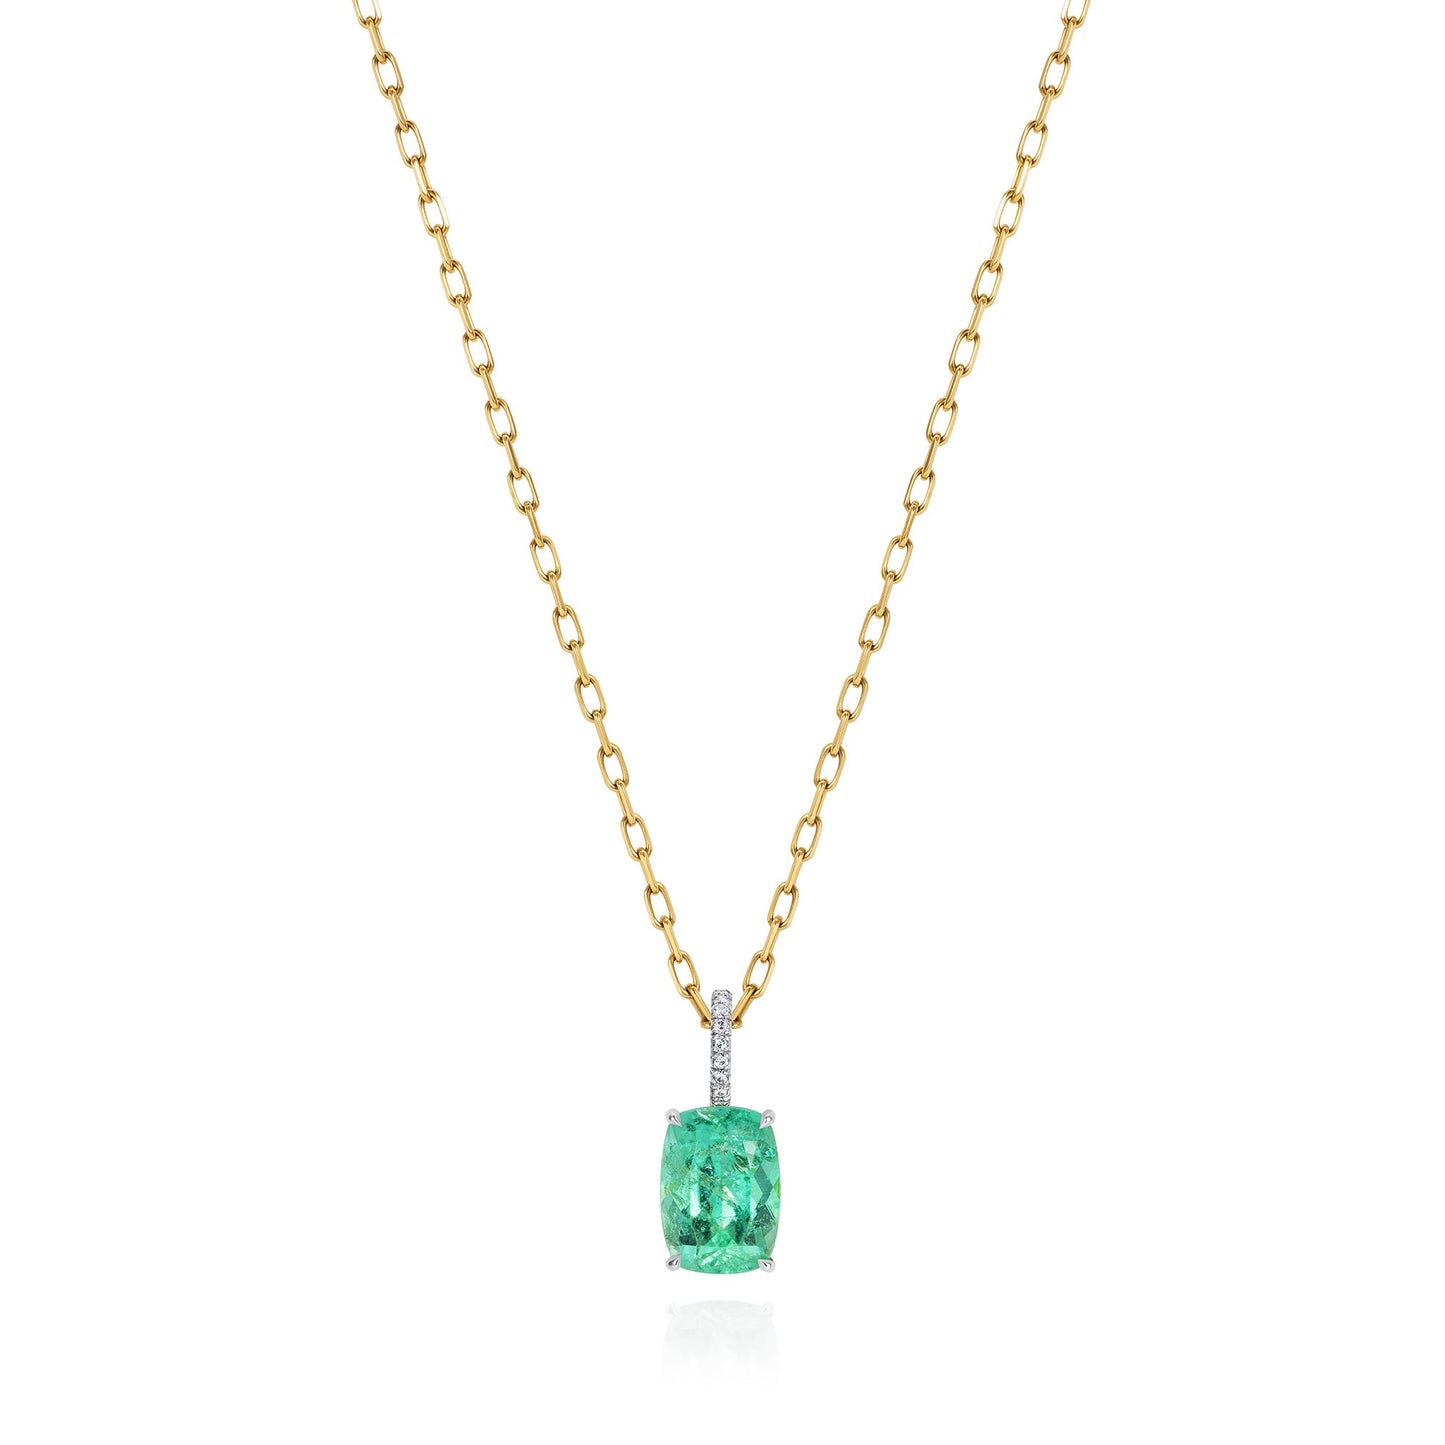 2.92 cts. Cushion cut paraiba necklace, diamonds and long chain - Ines Nieto London